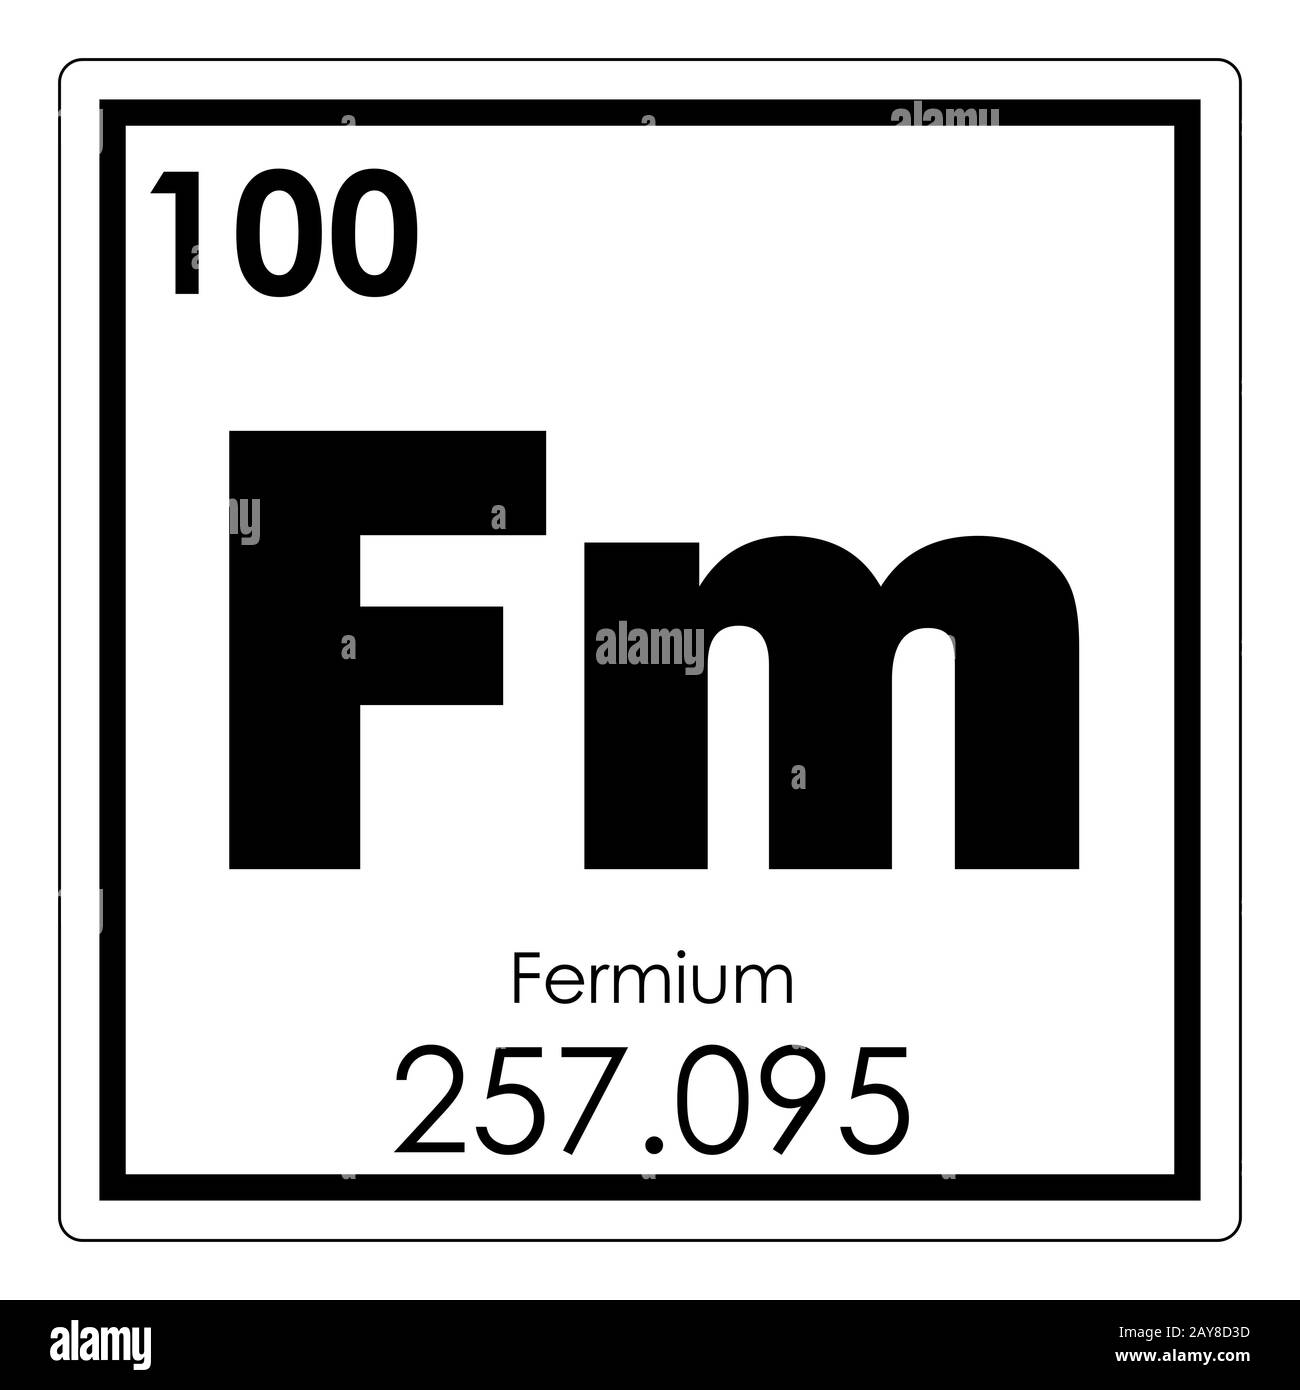 Fermium chemical element Stock Photo